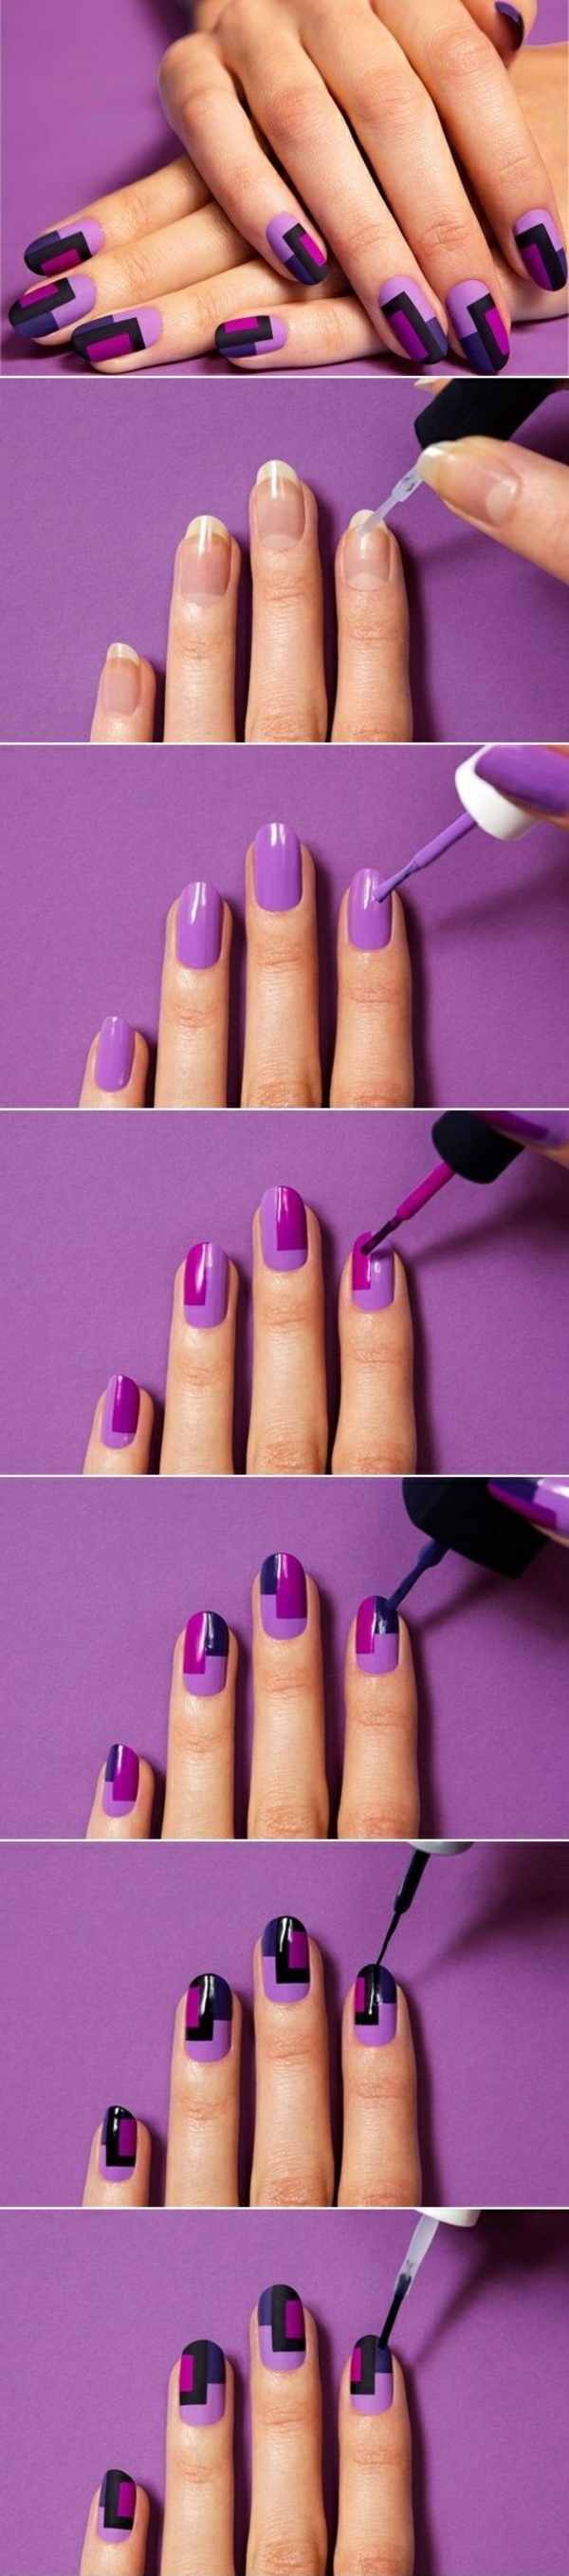 fingernails images geometric pattern create simple nails